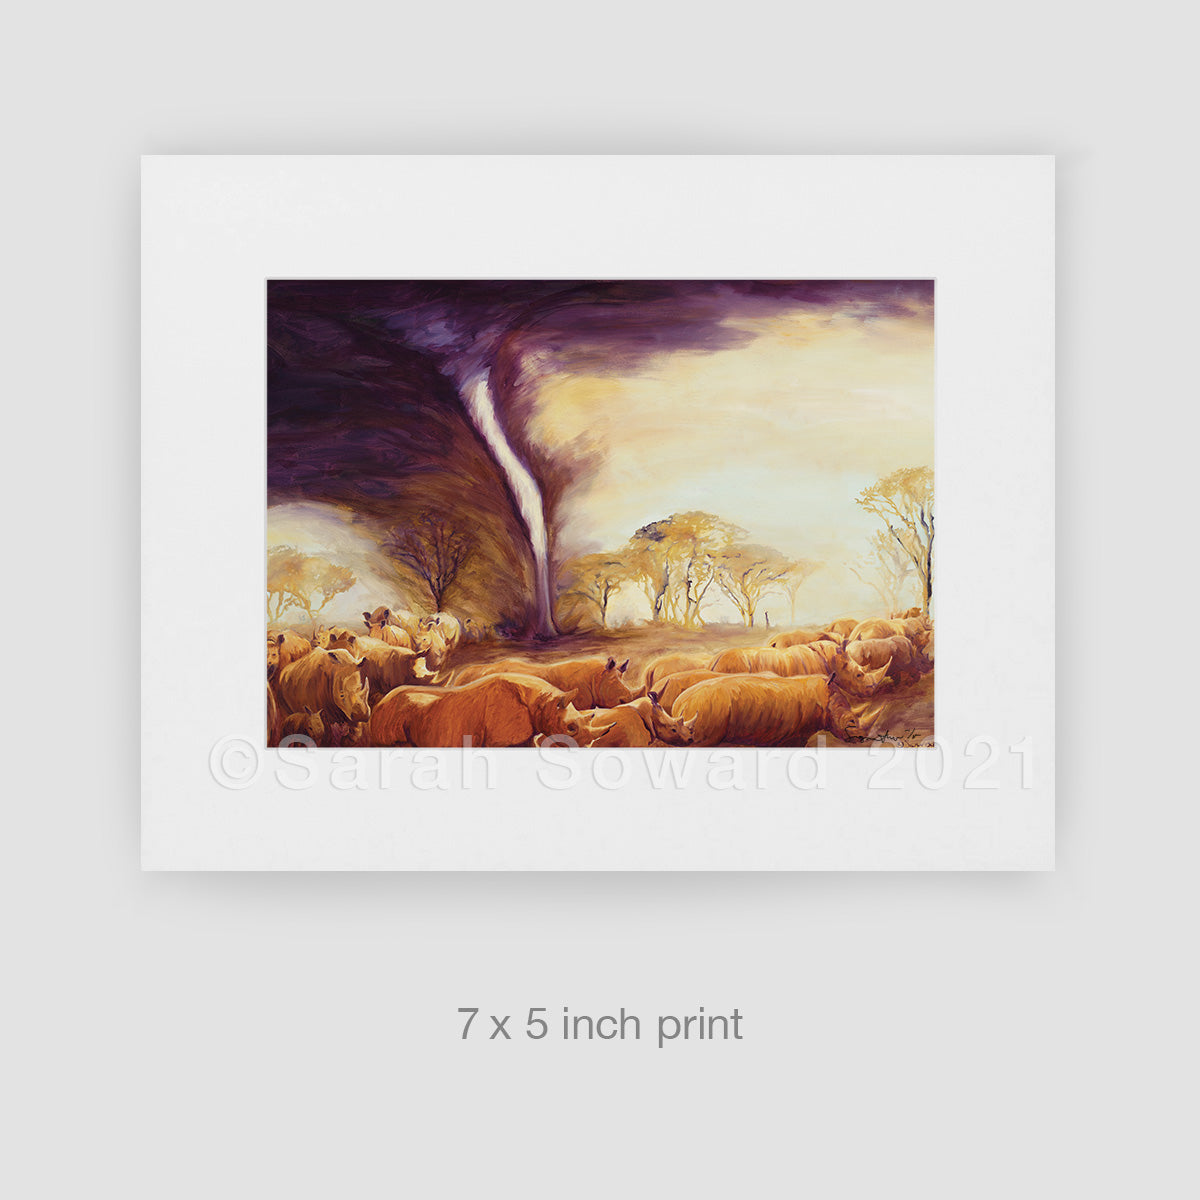 Tornado of Rhinos, Limited Edition Print